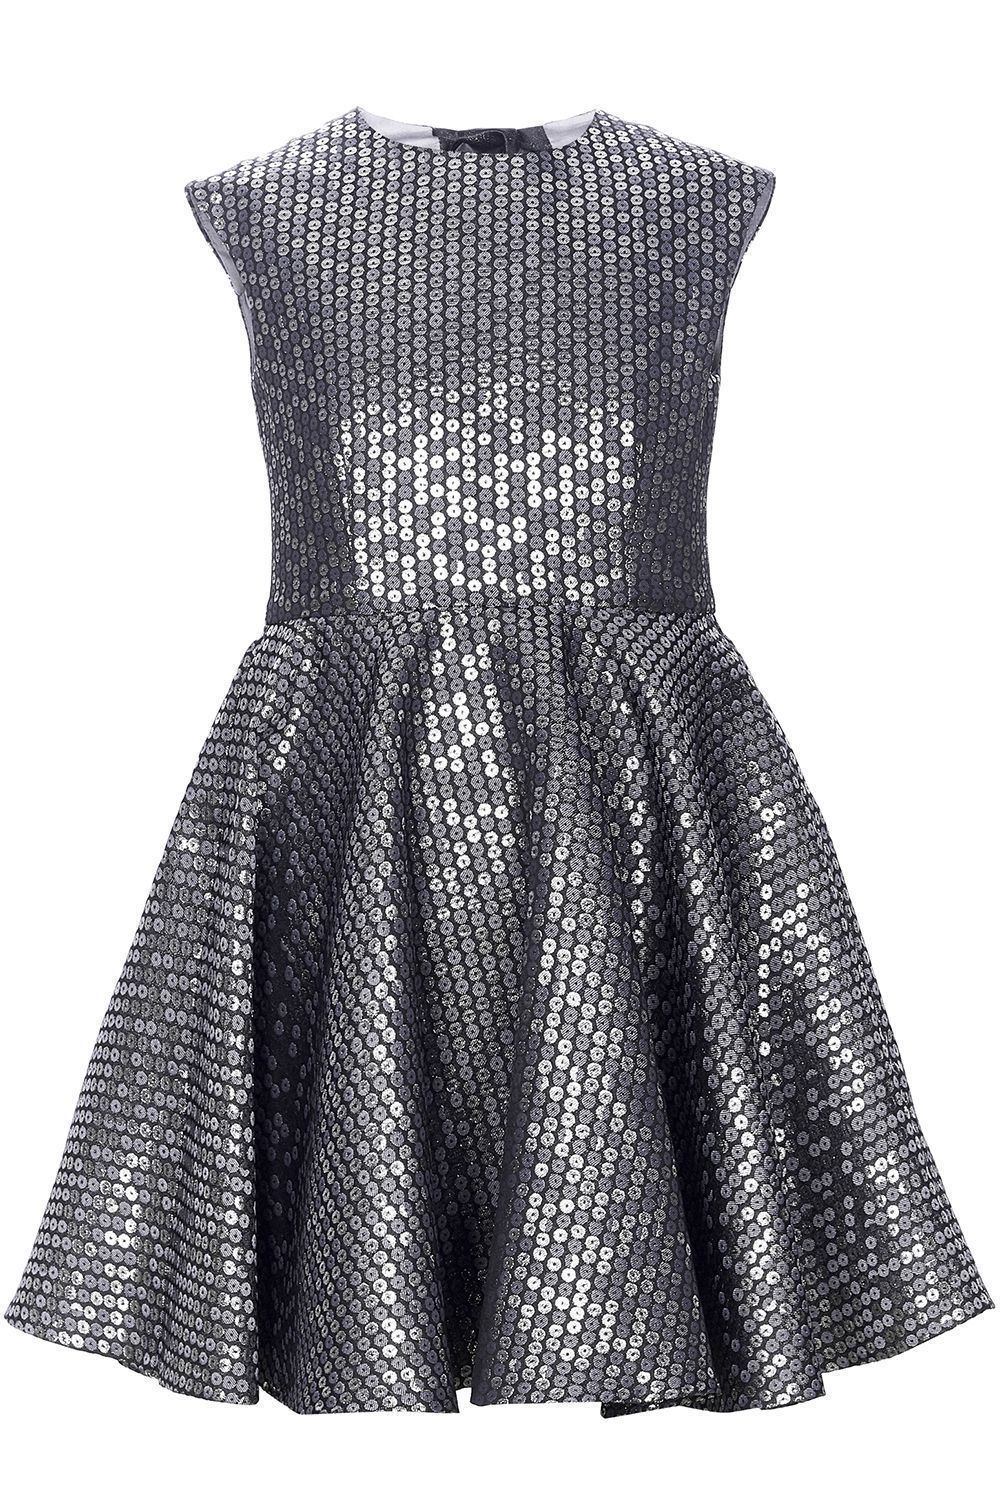 Платье Silver Spoon, размер 116, цвет серый - фото 2